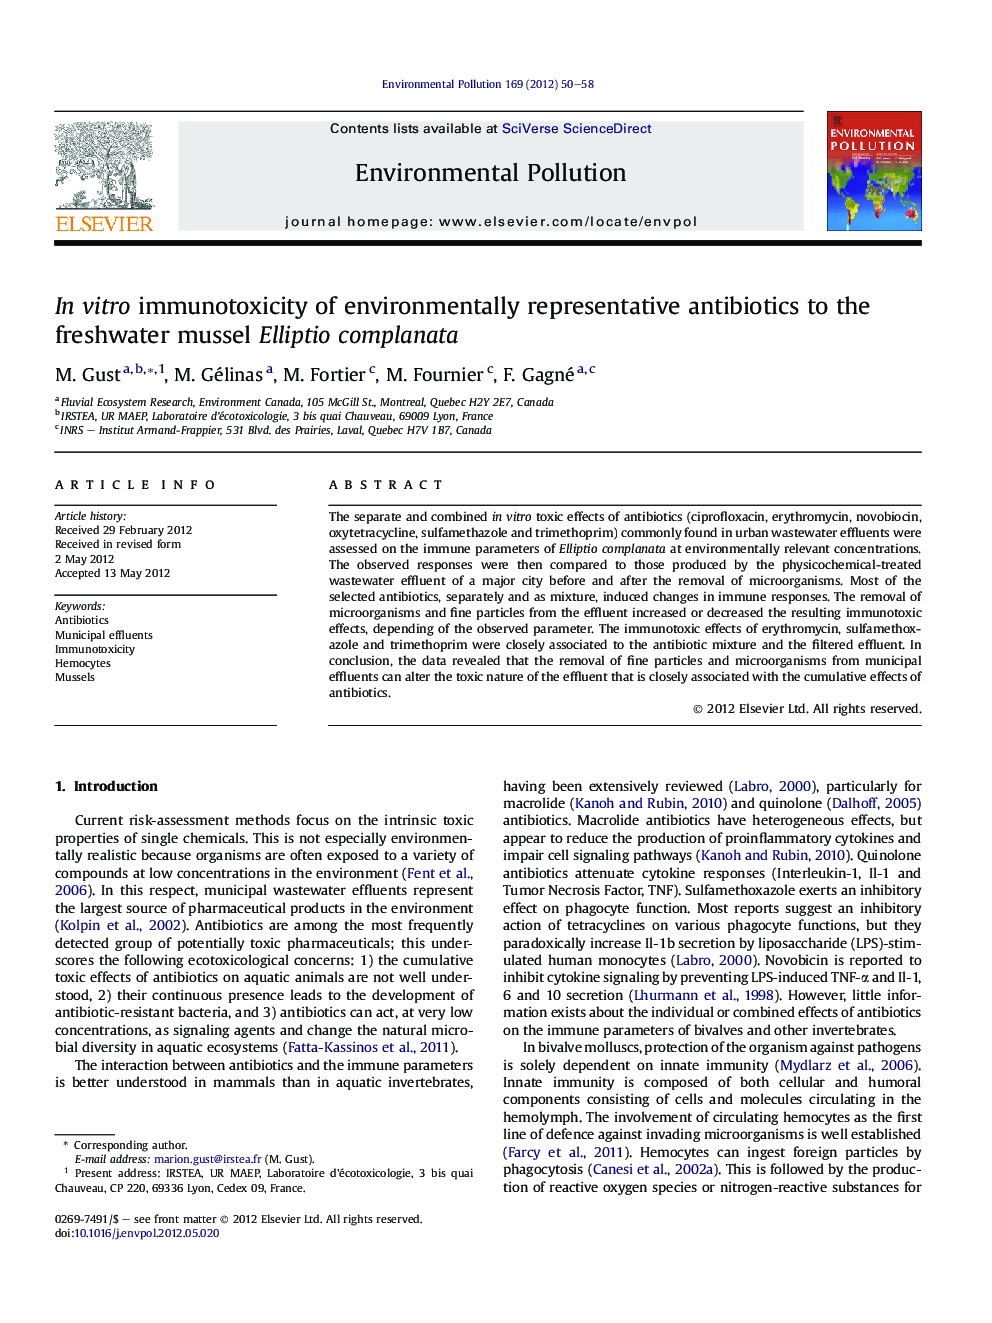 In vitro immunotoxicity of environmentally representative antibiotics to the freshwater mussel Elliptio complanata